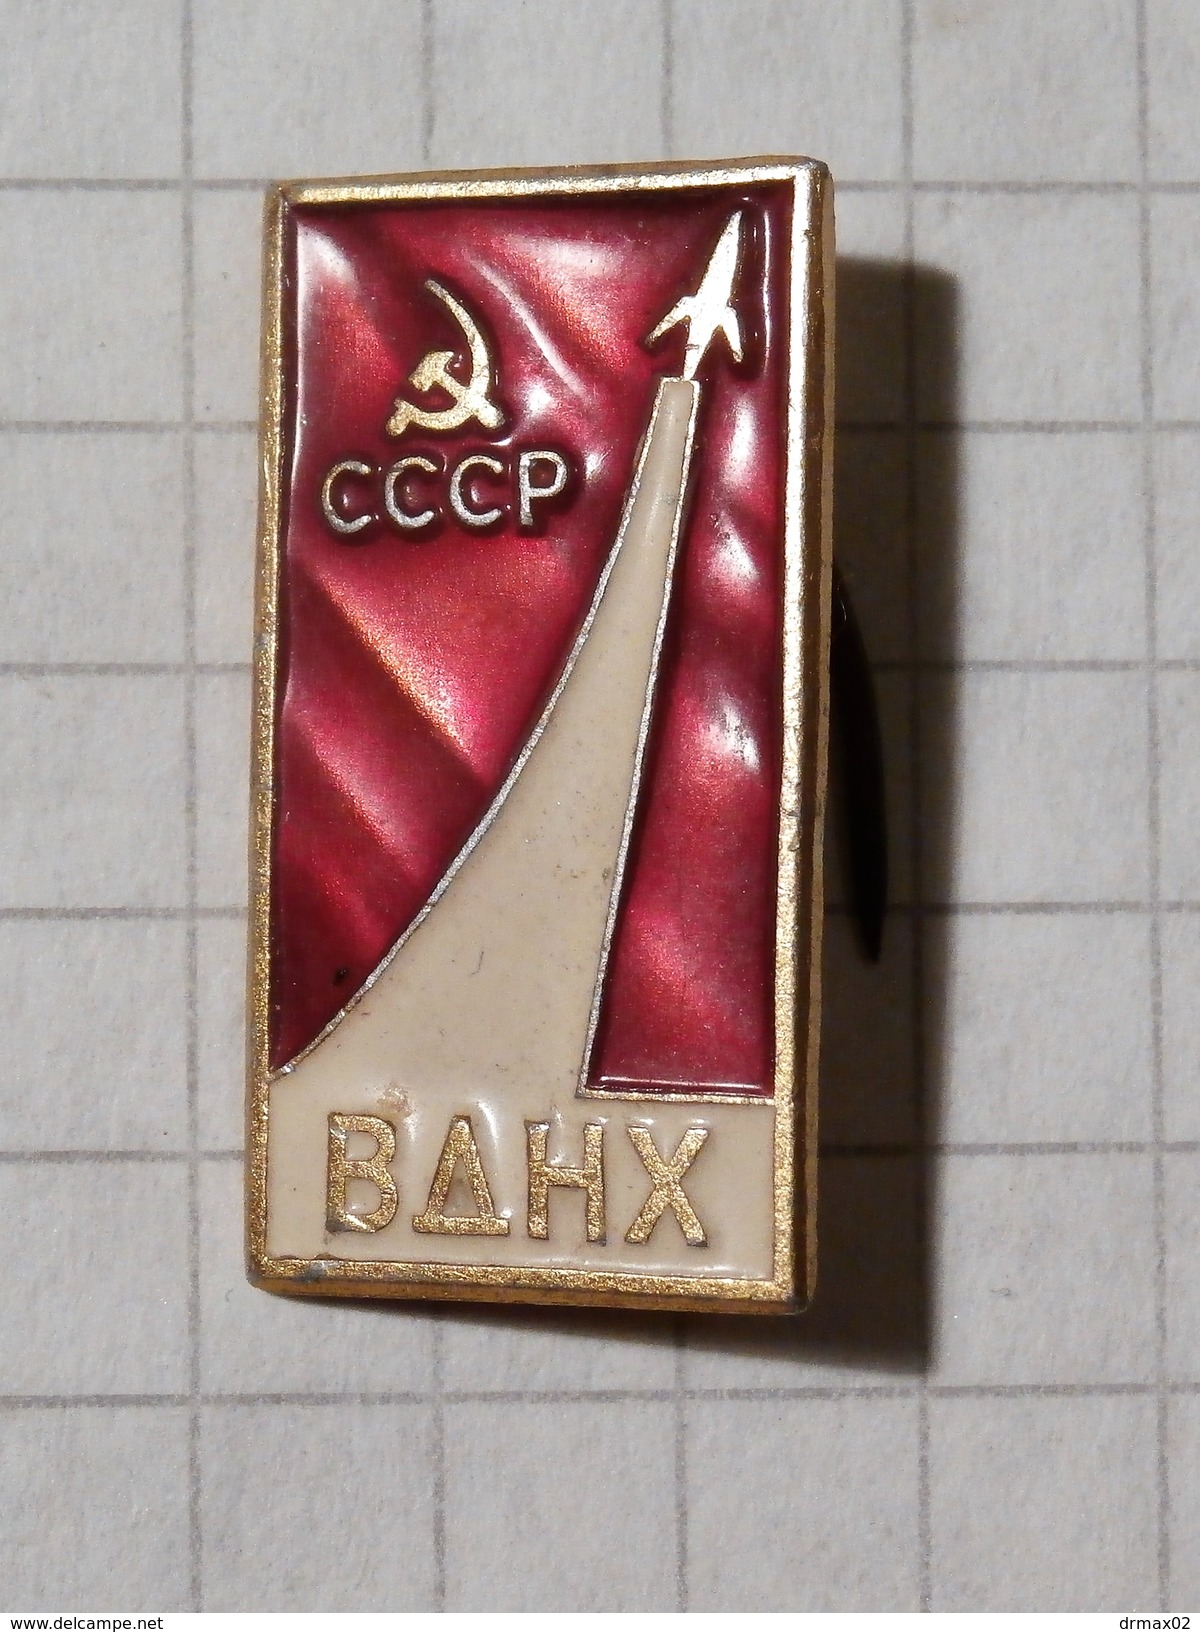 ROCKET VDNH SOVIET RUSSIAN SPACE / USSR - Espace